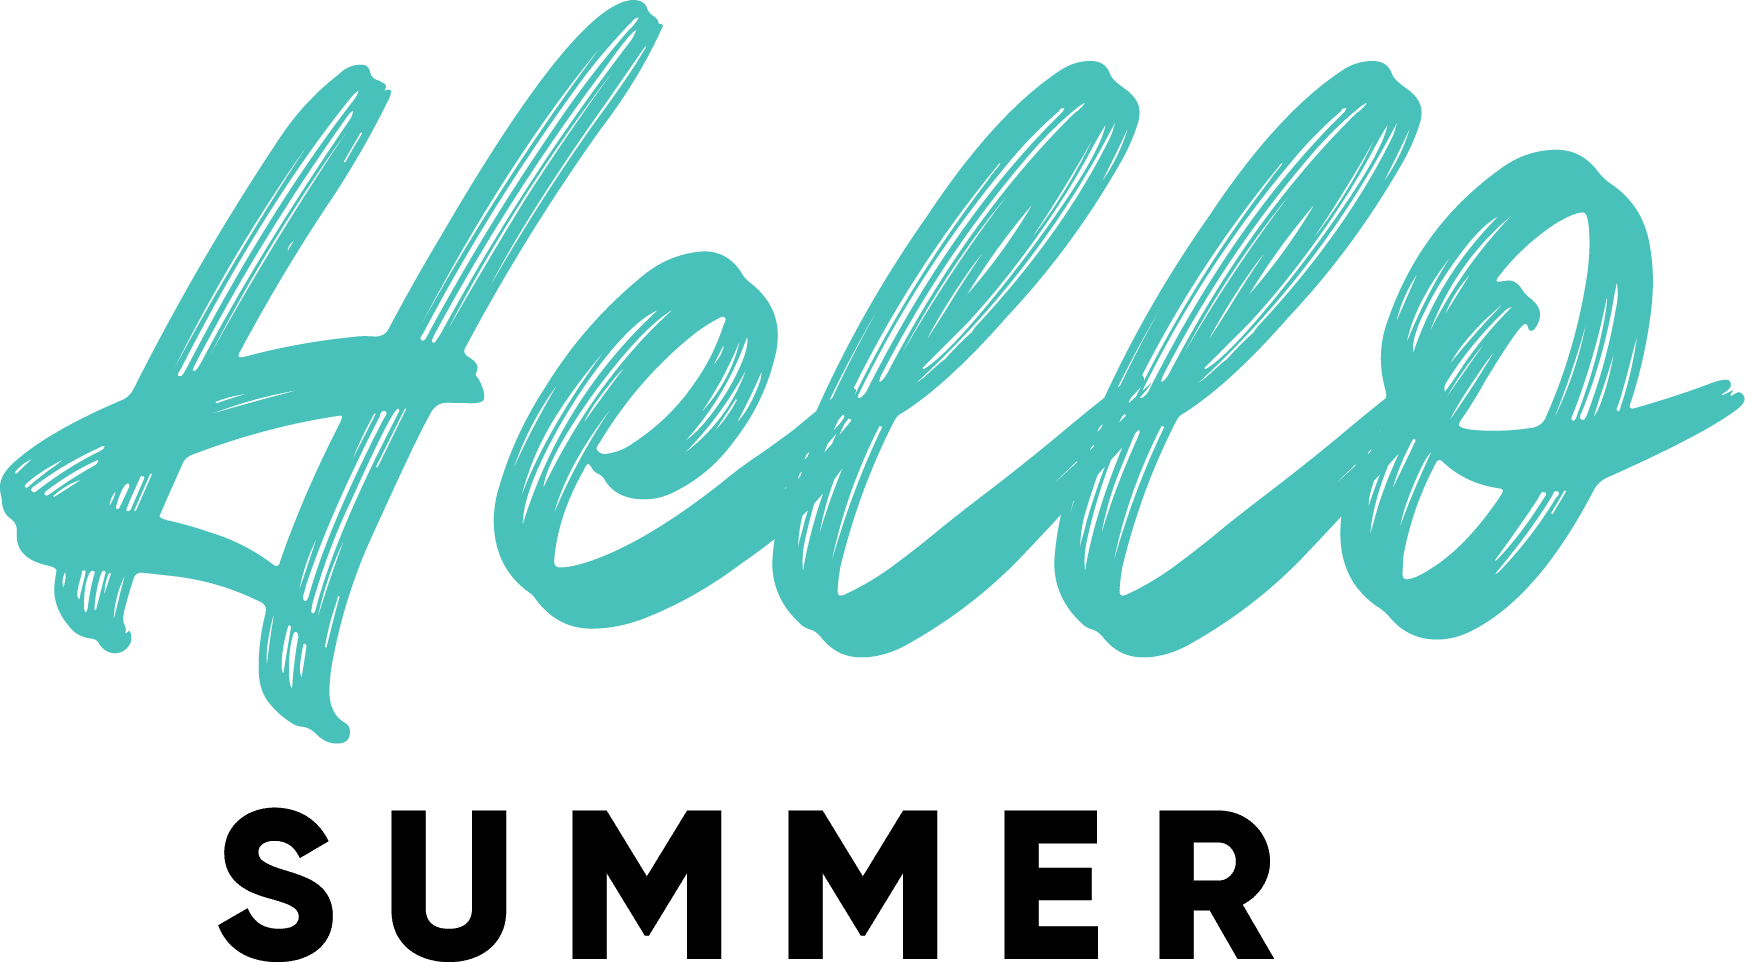 Text Hello Summer